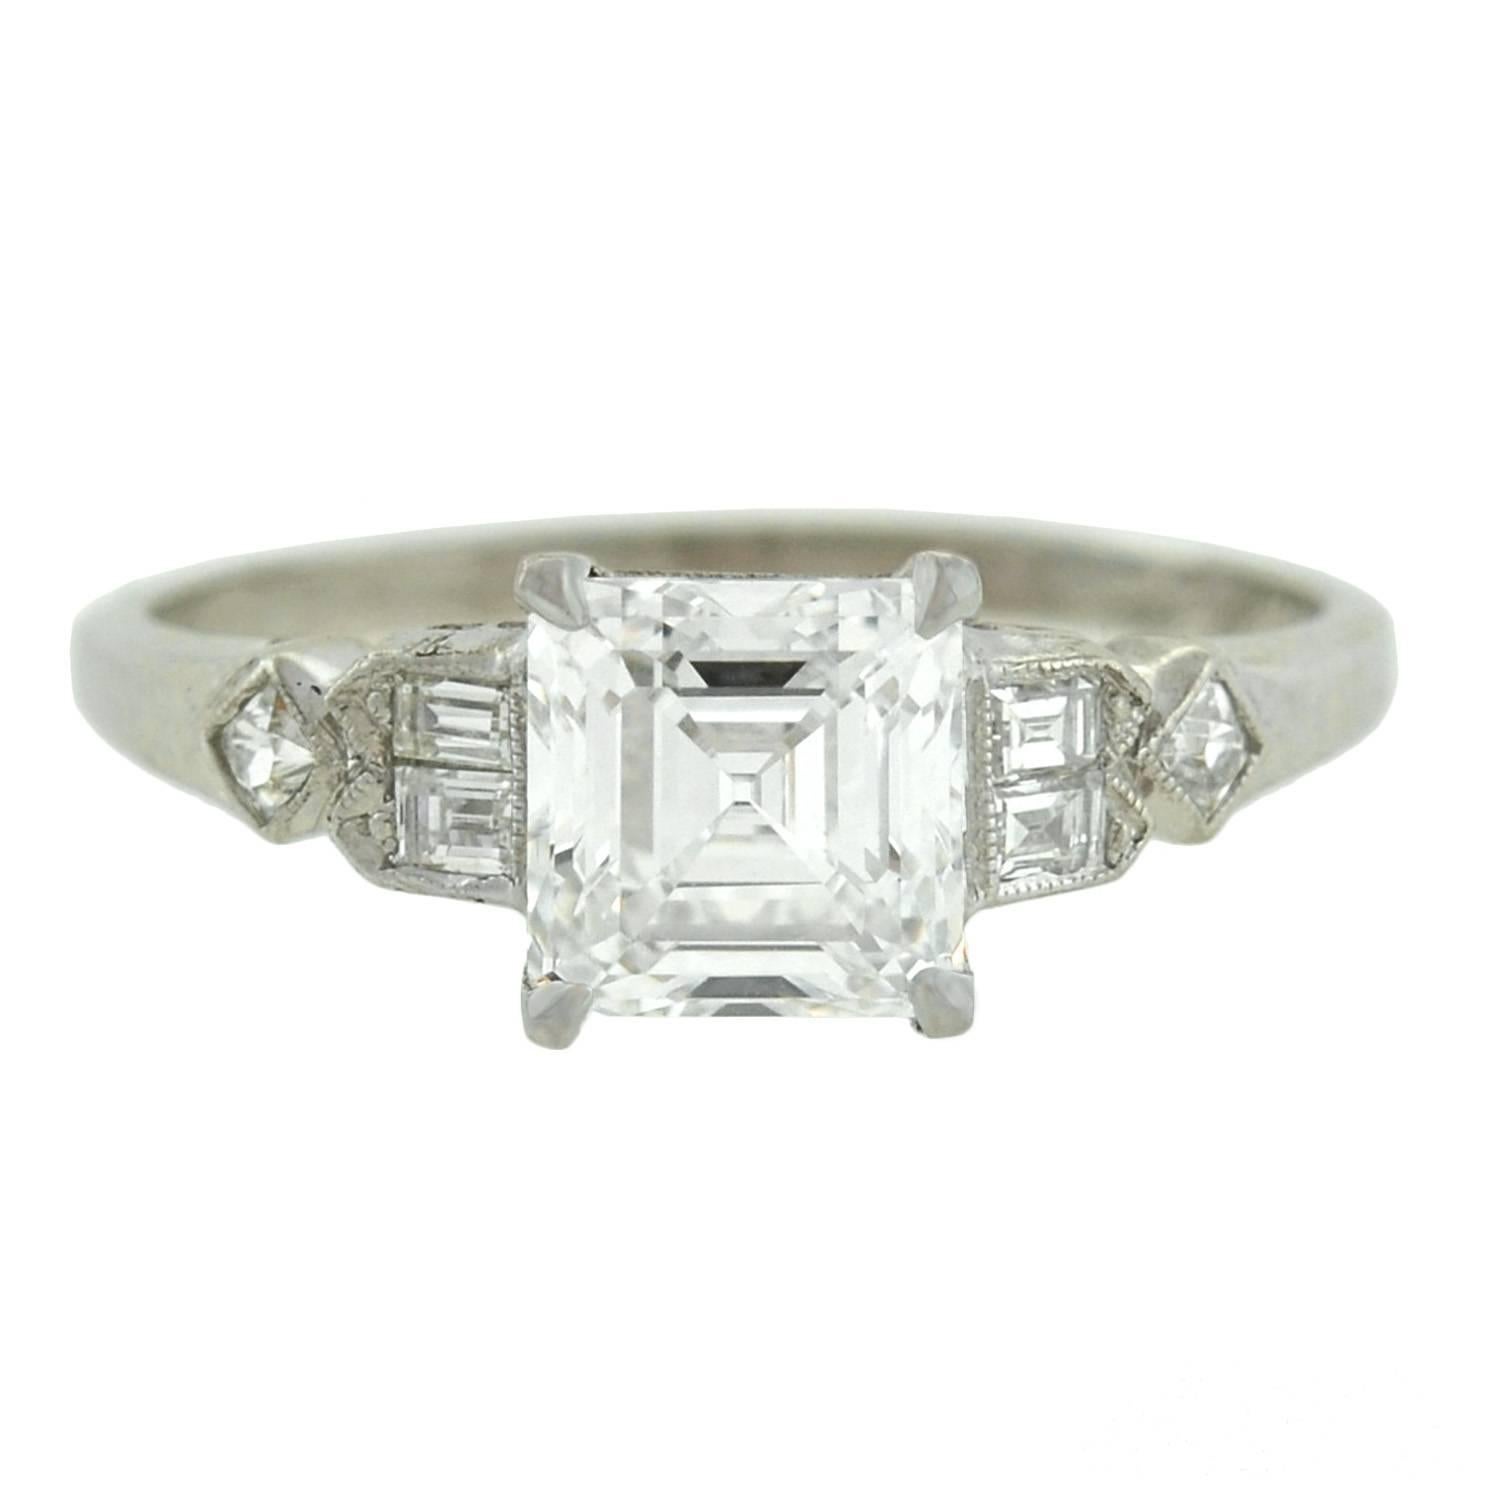 Retro GIA Certified 1.39 Carat Square Emerald Cut Diamond Engagement Ring